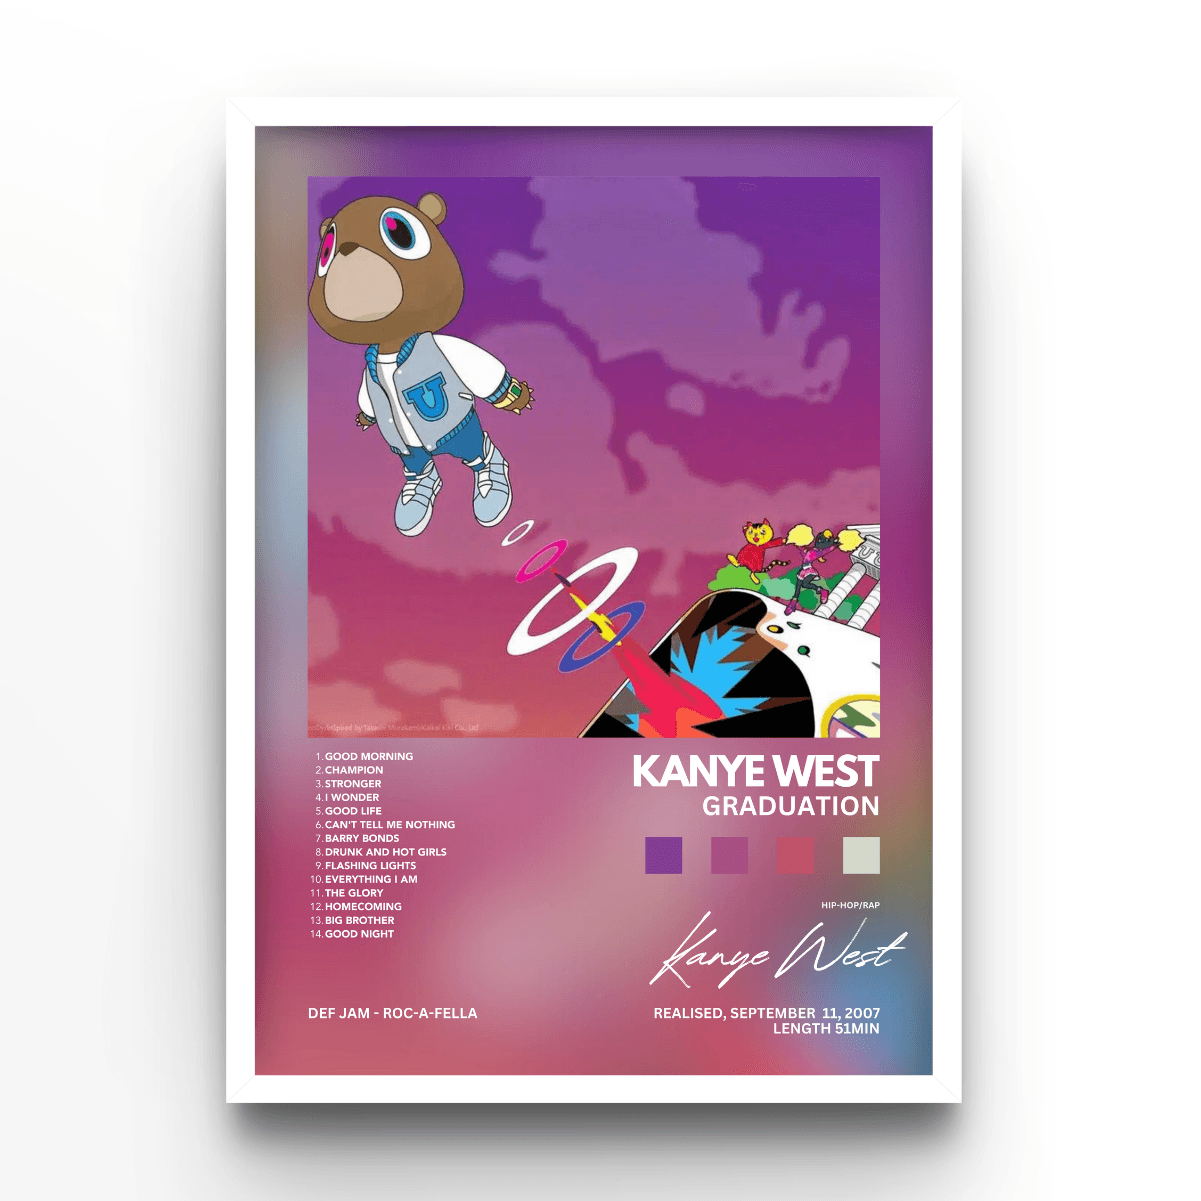 Kanye West Graduation - A4, A3, A2 Posters Base - Poster Print Shop / Art Prints / PostersBase